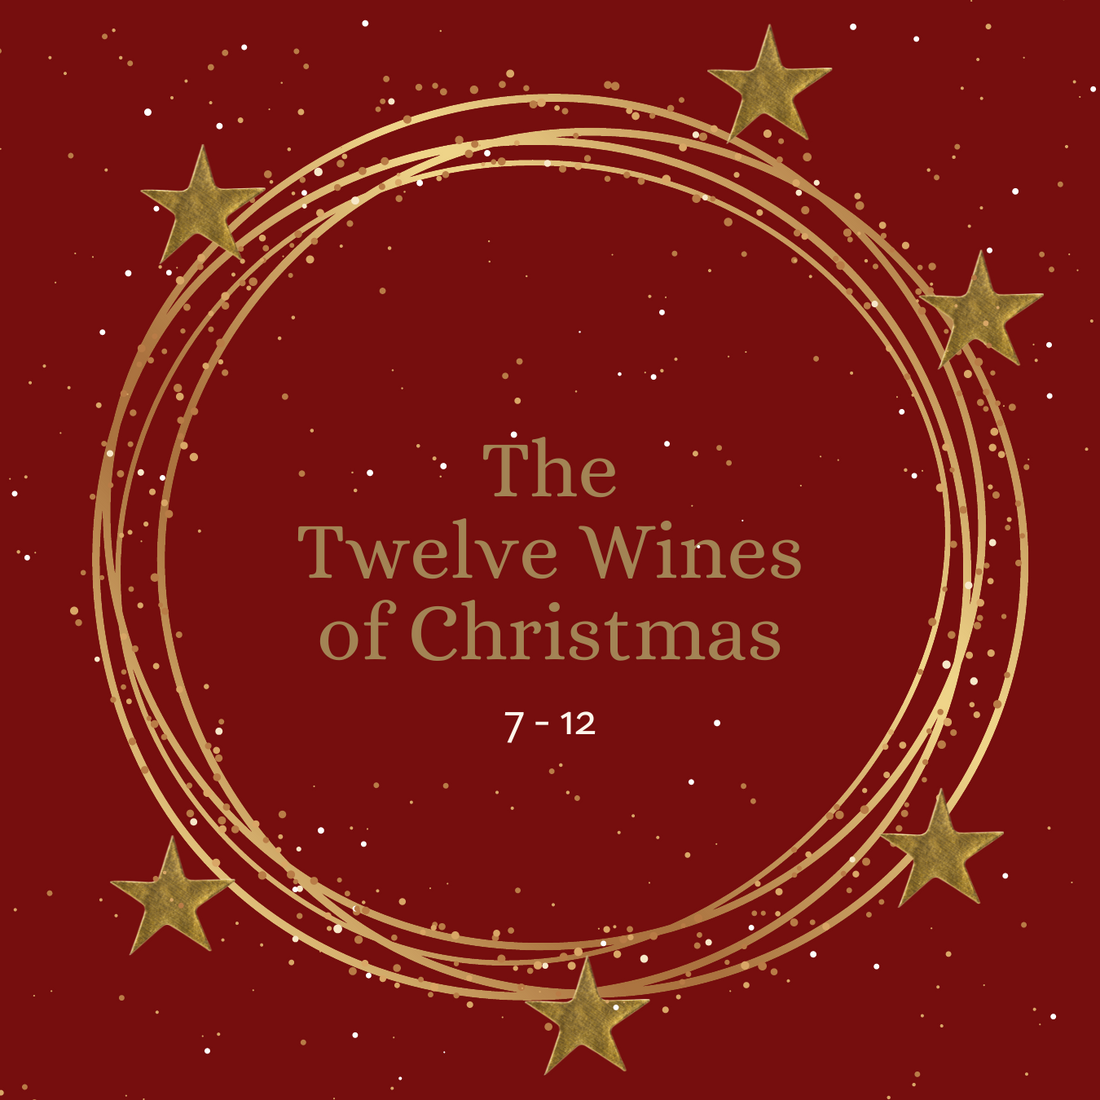 The Twelve Wines of Christmas (Part 2)